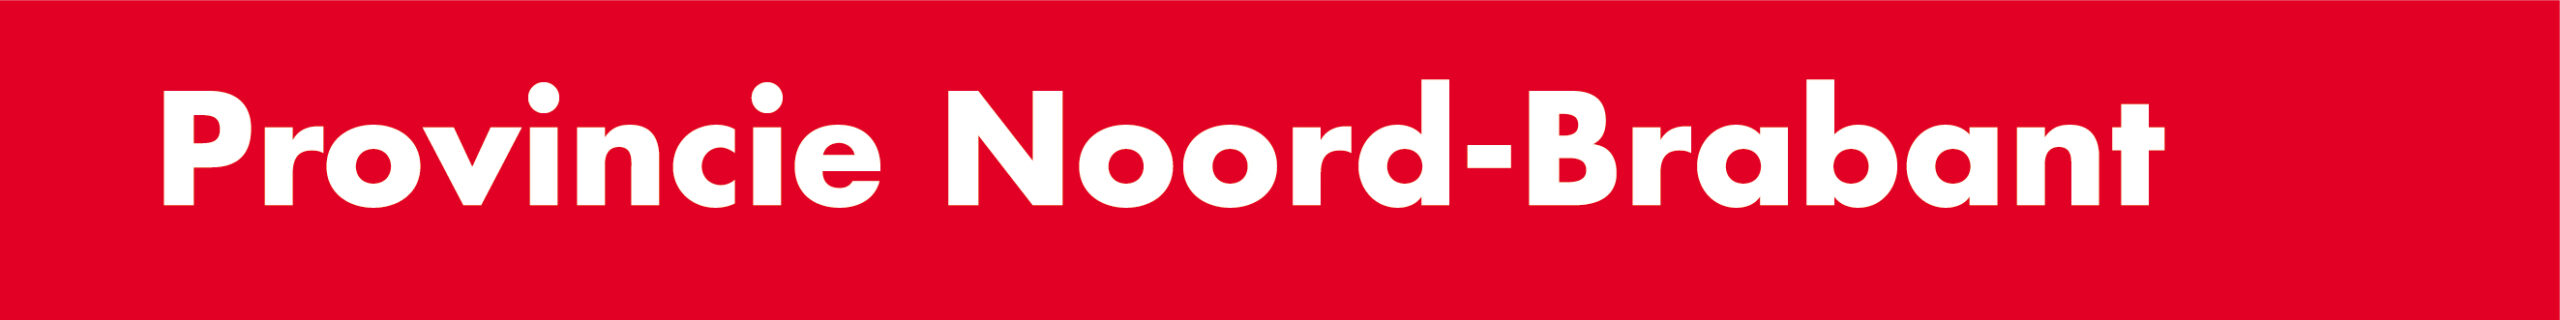 Logo provincie rood jpg